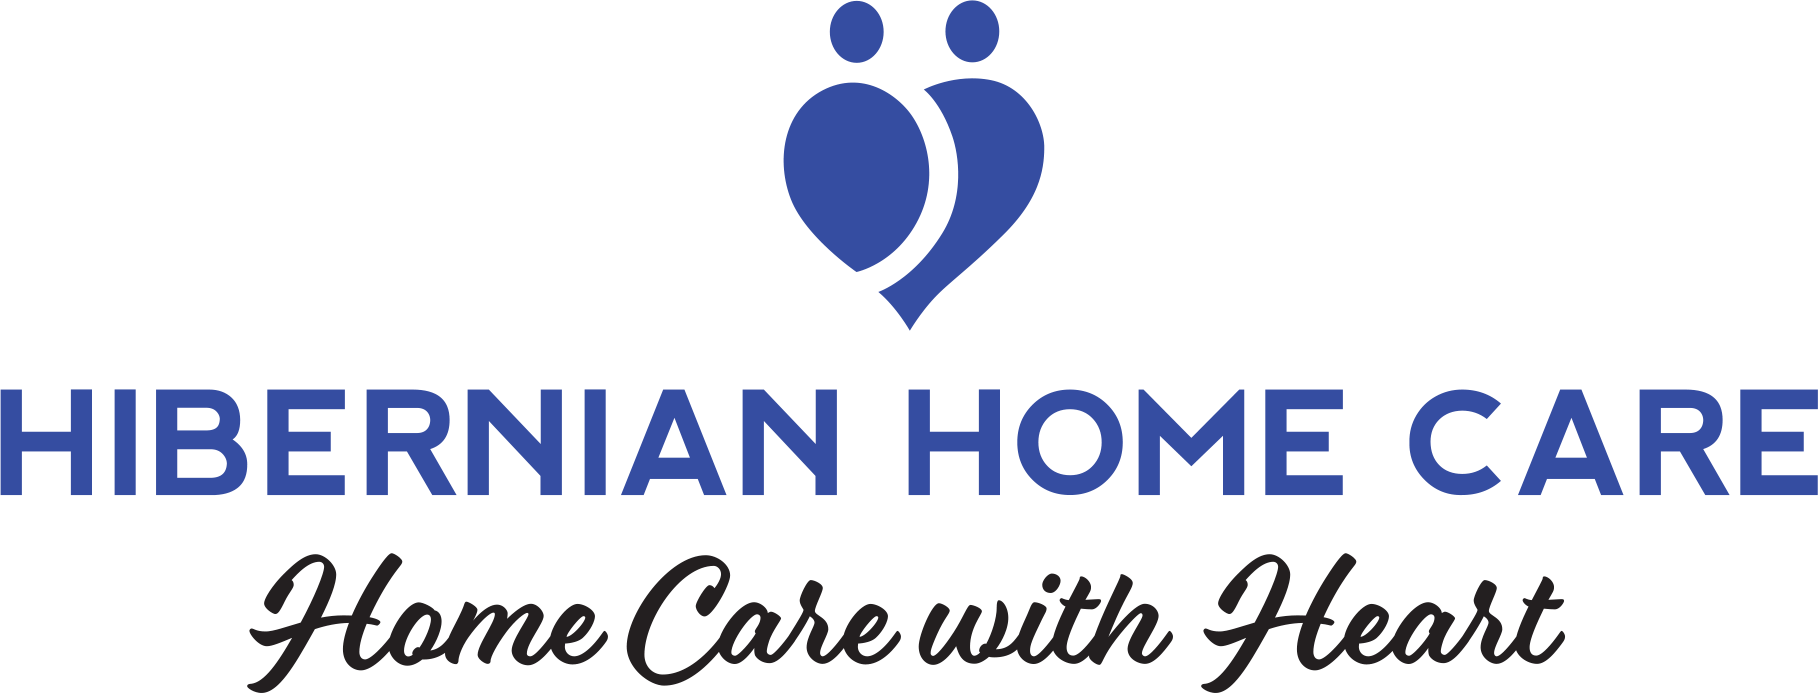 HIBERNIAN HOME CARE